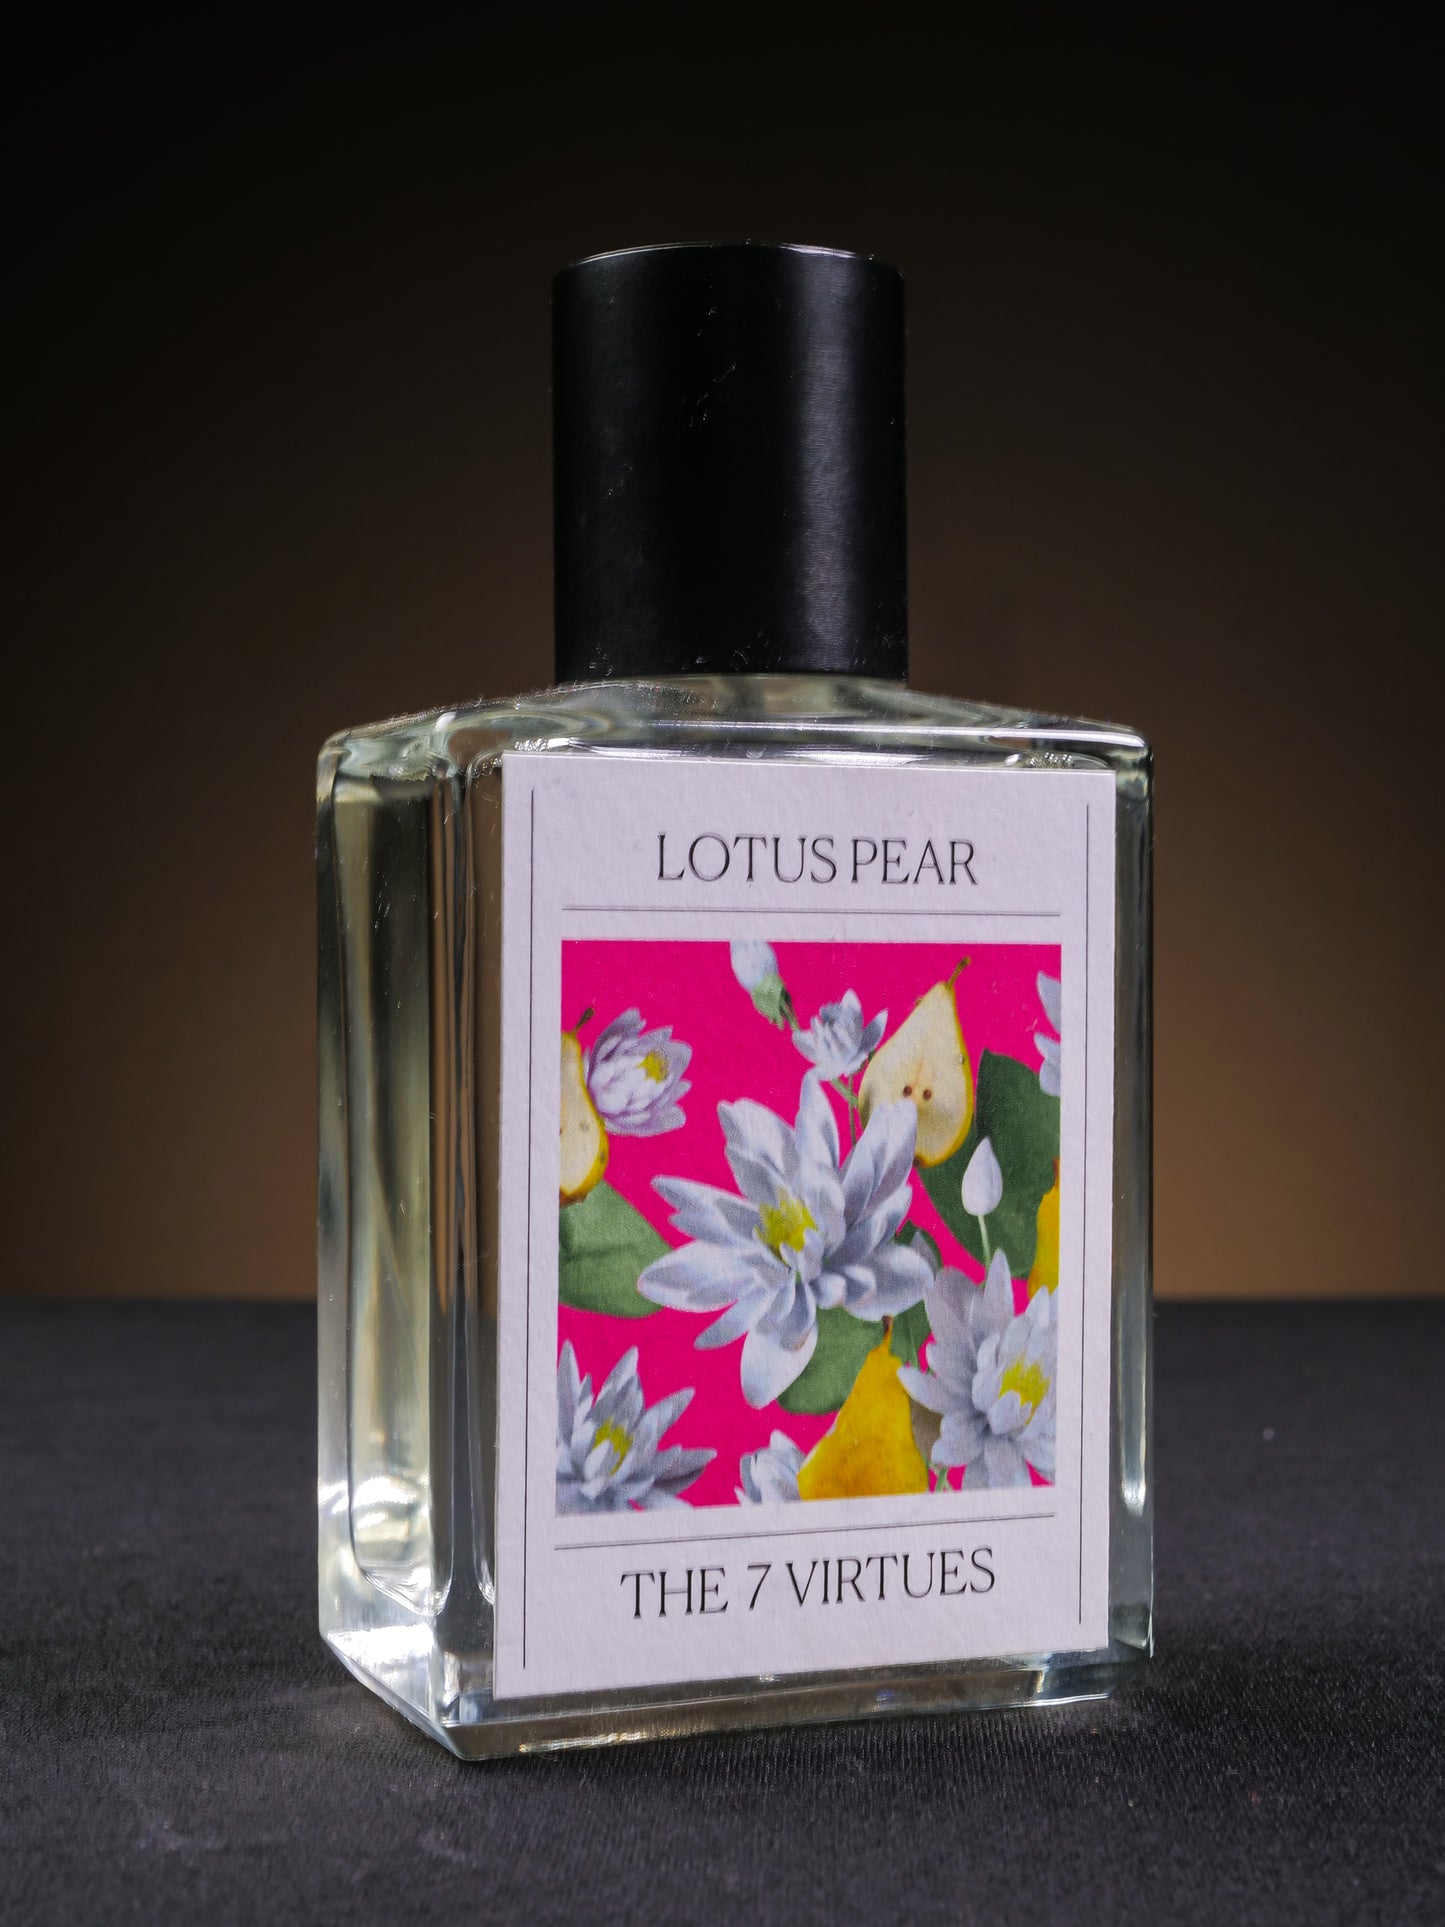 The 7 Virtues "Lotus Pear" Sample Only NOT Full Bottle